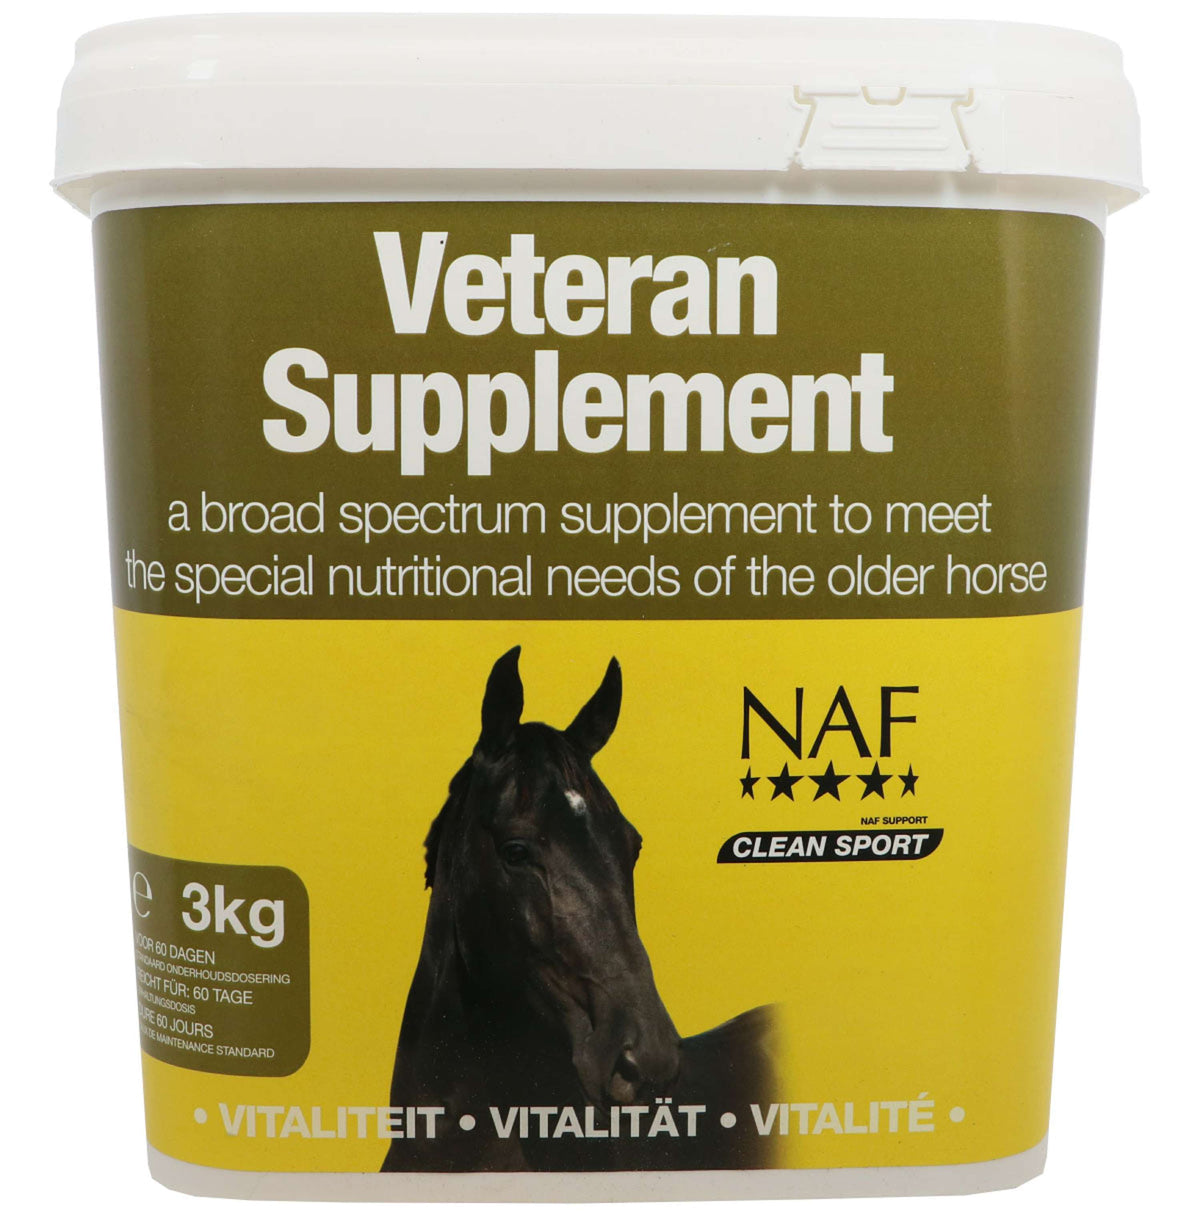 NAF Veteran Supplement